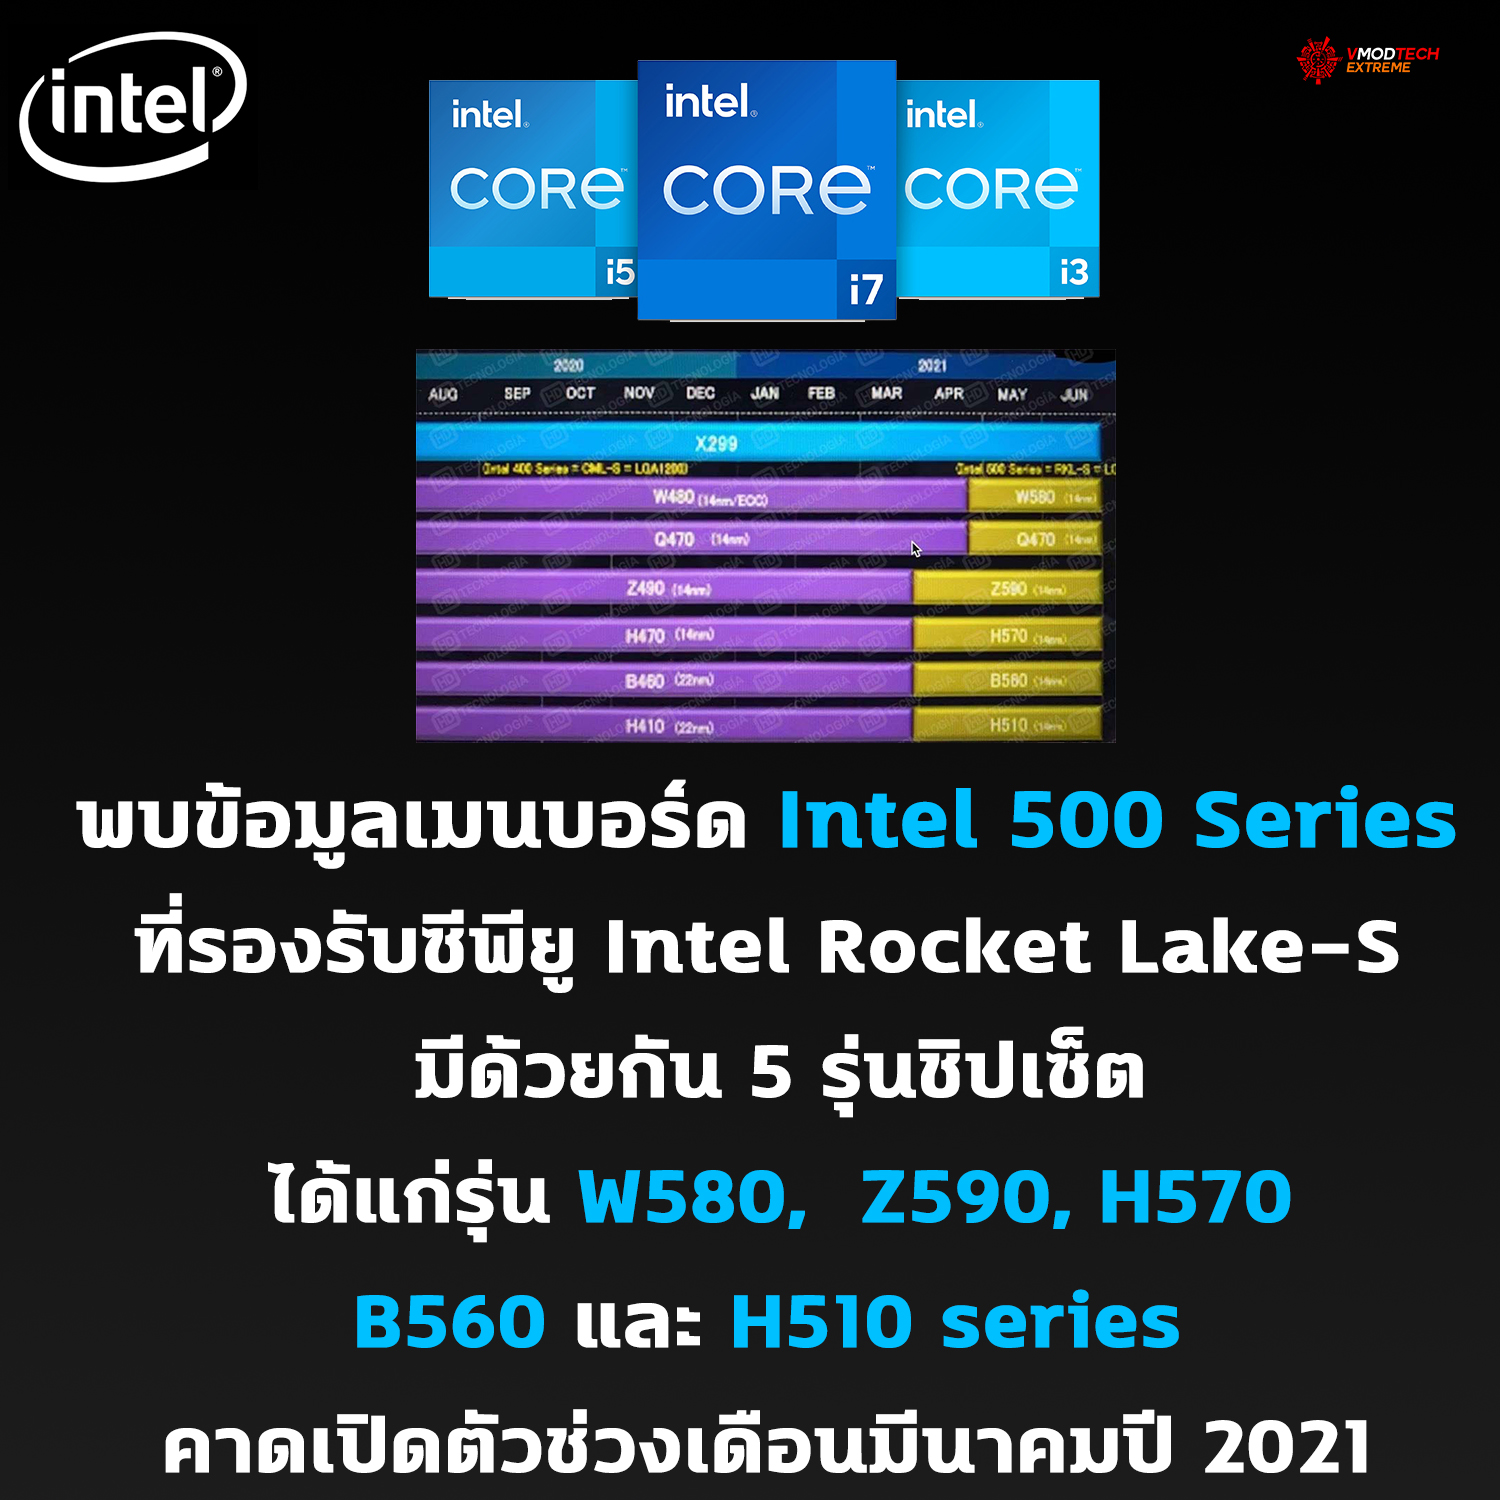 intel 500 series intel rocket lake s 2021 พบข้อมูลเมนบอร์ด Intel 500 Series ที่รองรับซีพียู Intel Rocket Lake S มีด้วยกัน 5รุ่นชิปเซ็ตคาดเปิดตัวช่วงเดือนมีนาคมปี 2021 